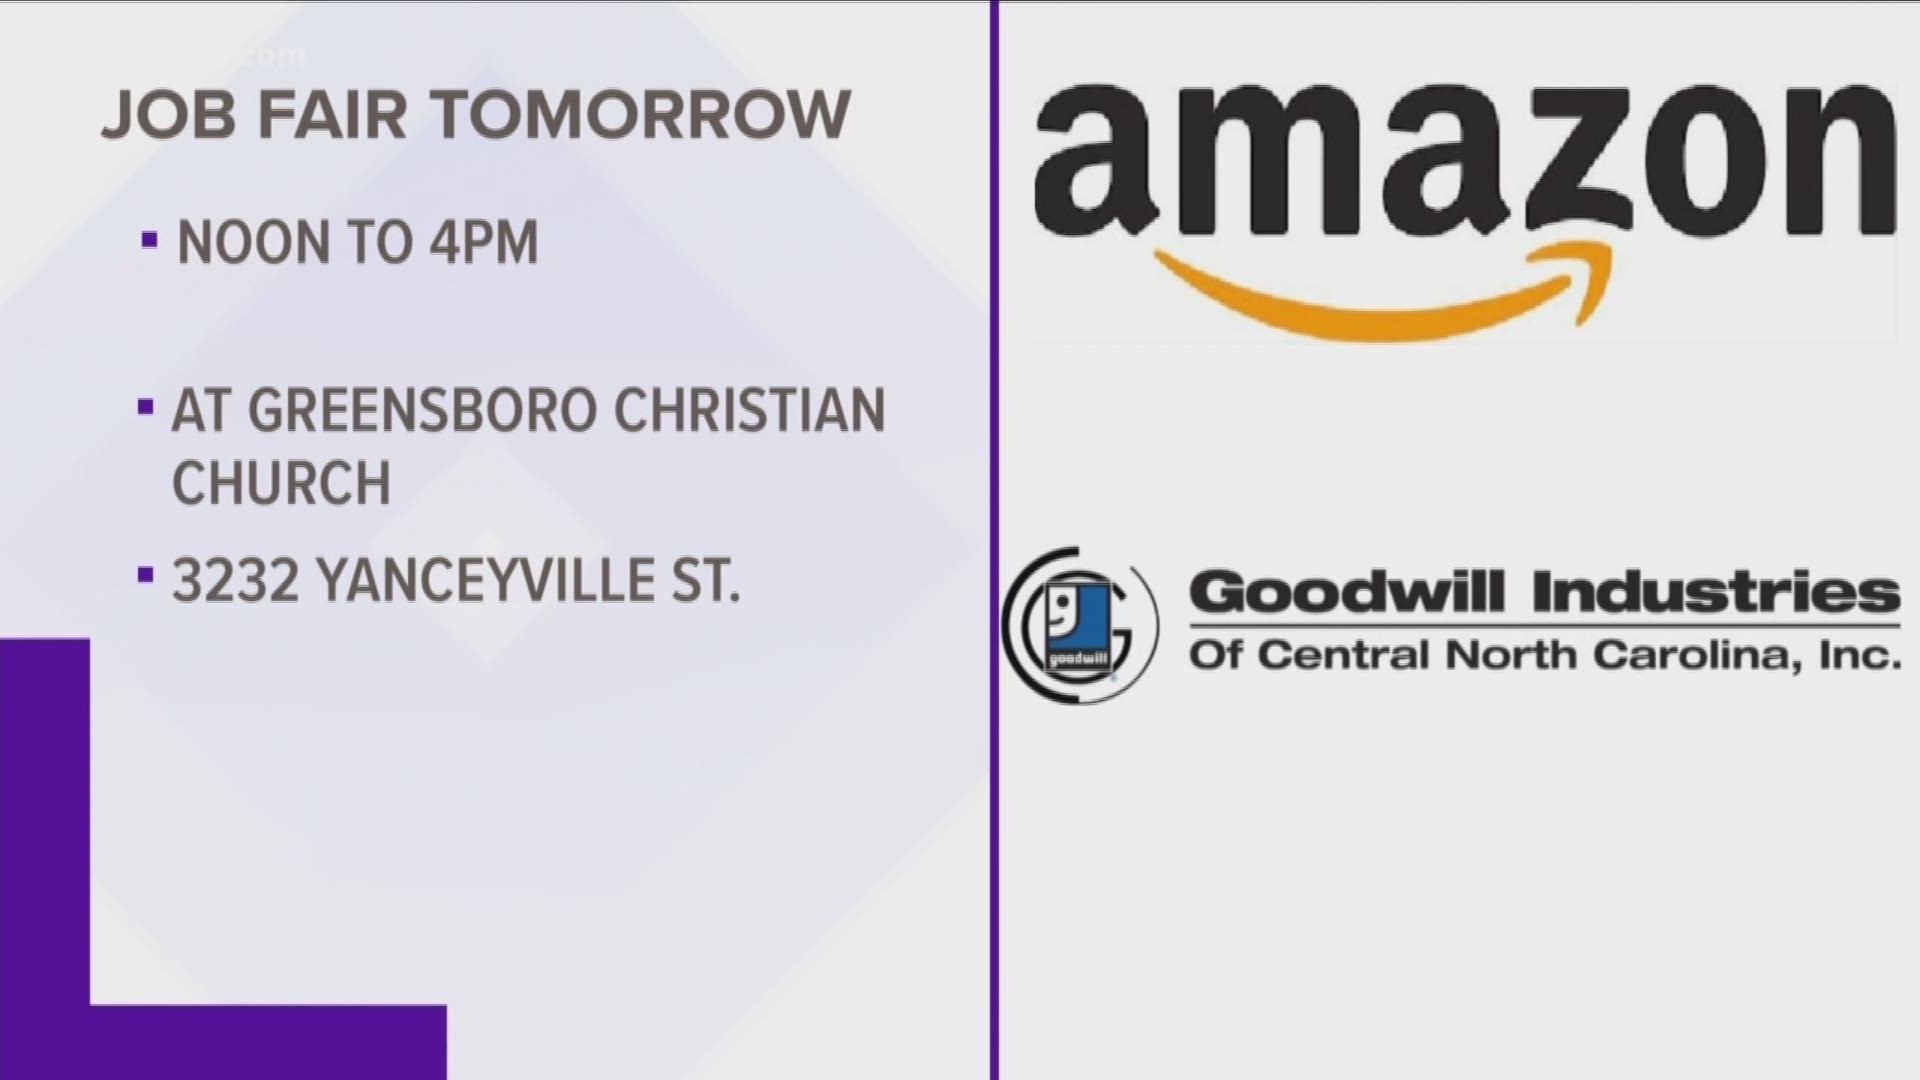 Thursday, the company will have a hiring team at a job fair at the Greensboro Christian Church on Yanceyville Street.